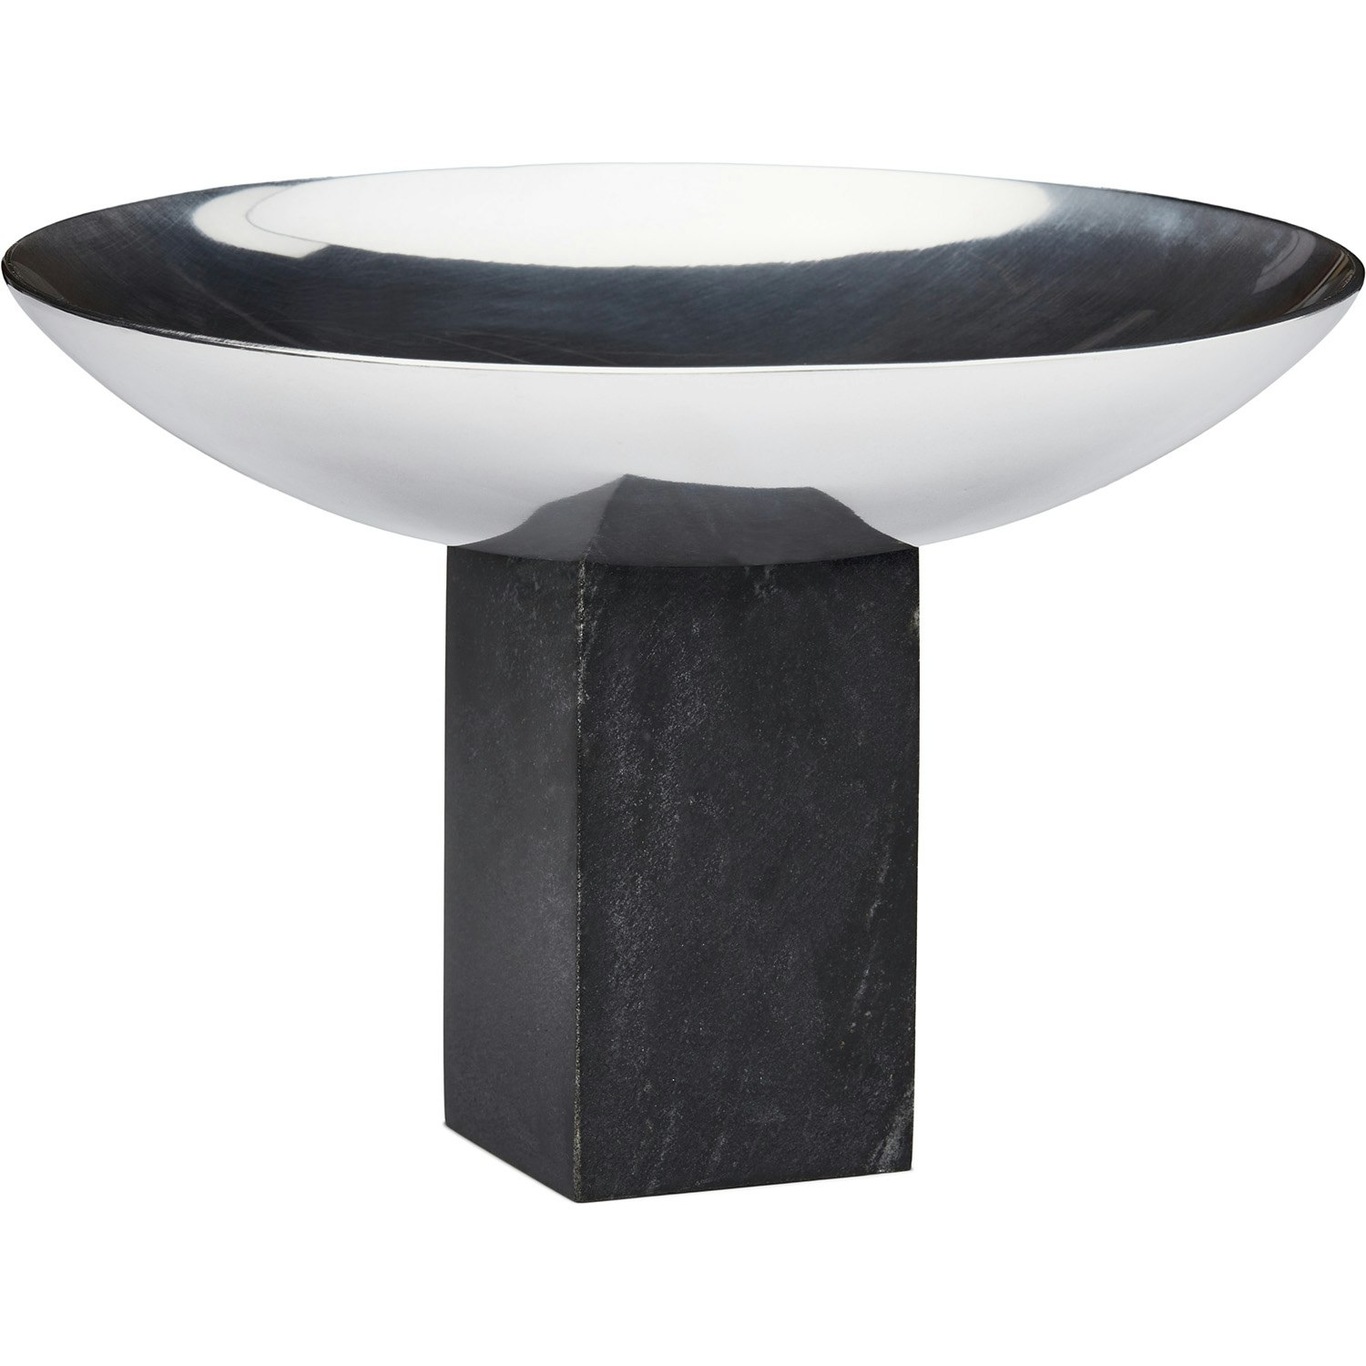 SAPOTO Medium Bowl Ø22 cm, Black/Silver